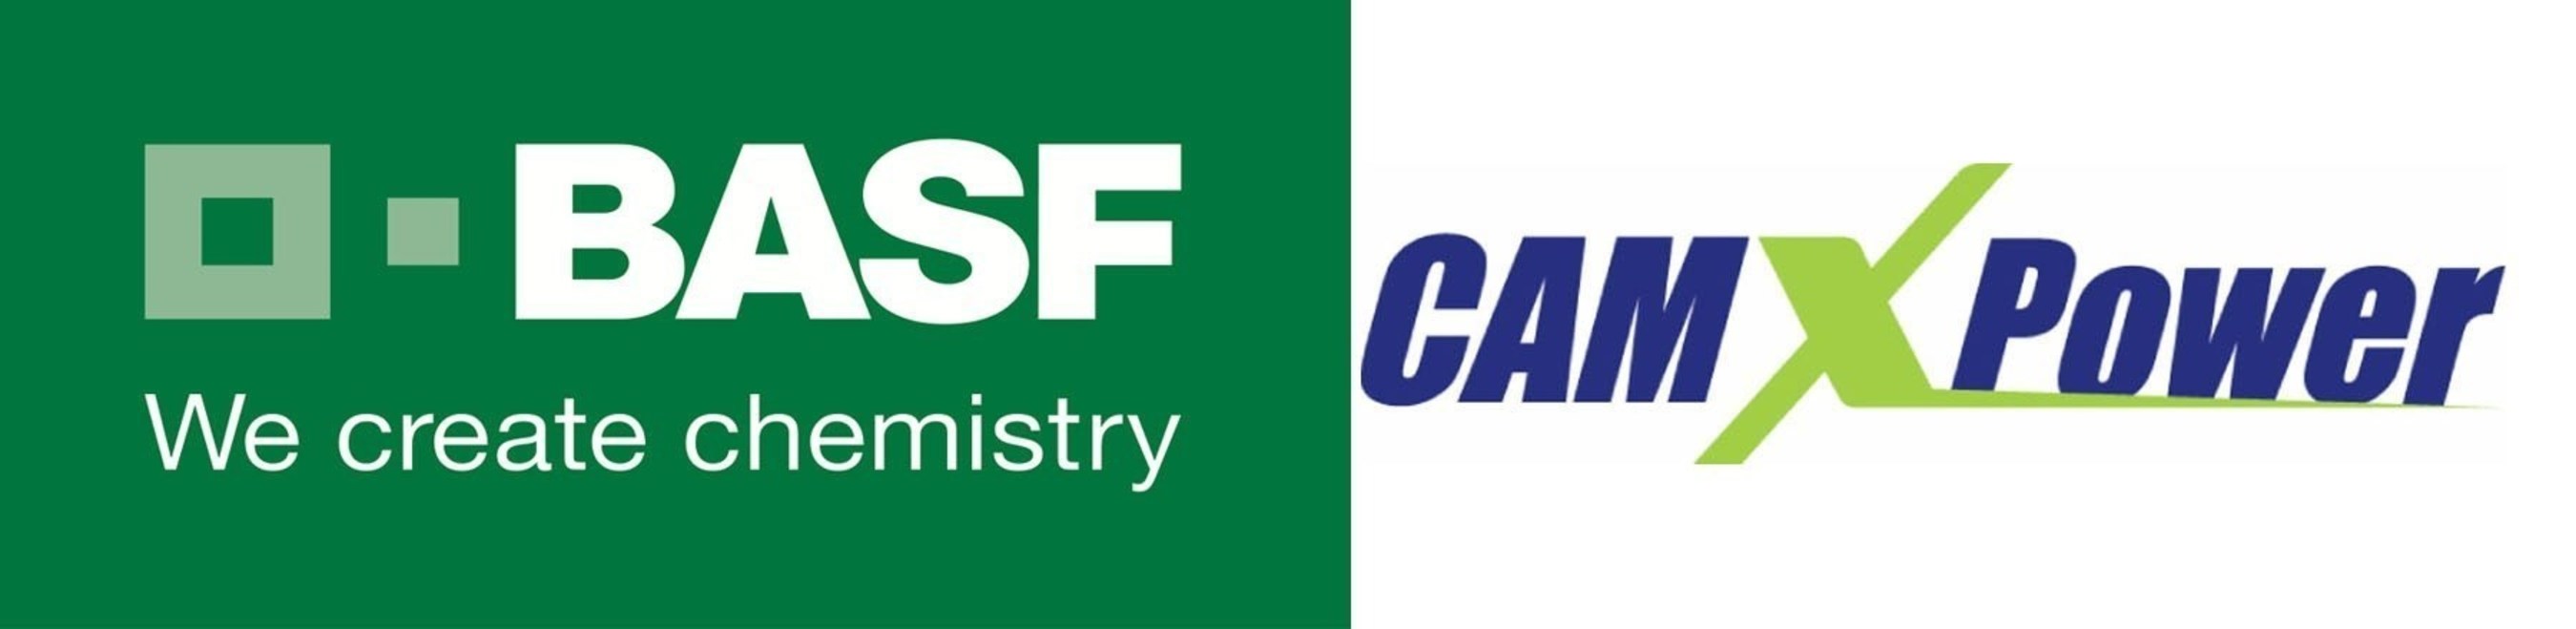 CAMX Power and BASF Logos